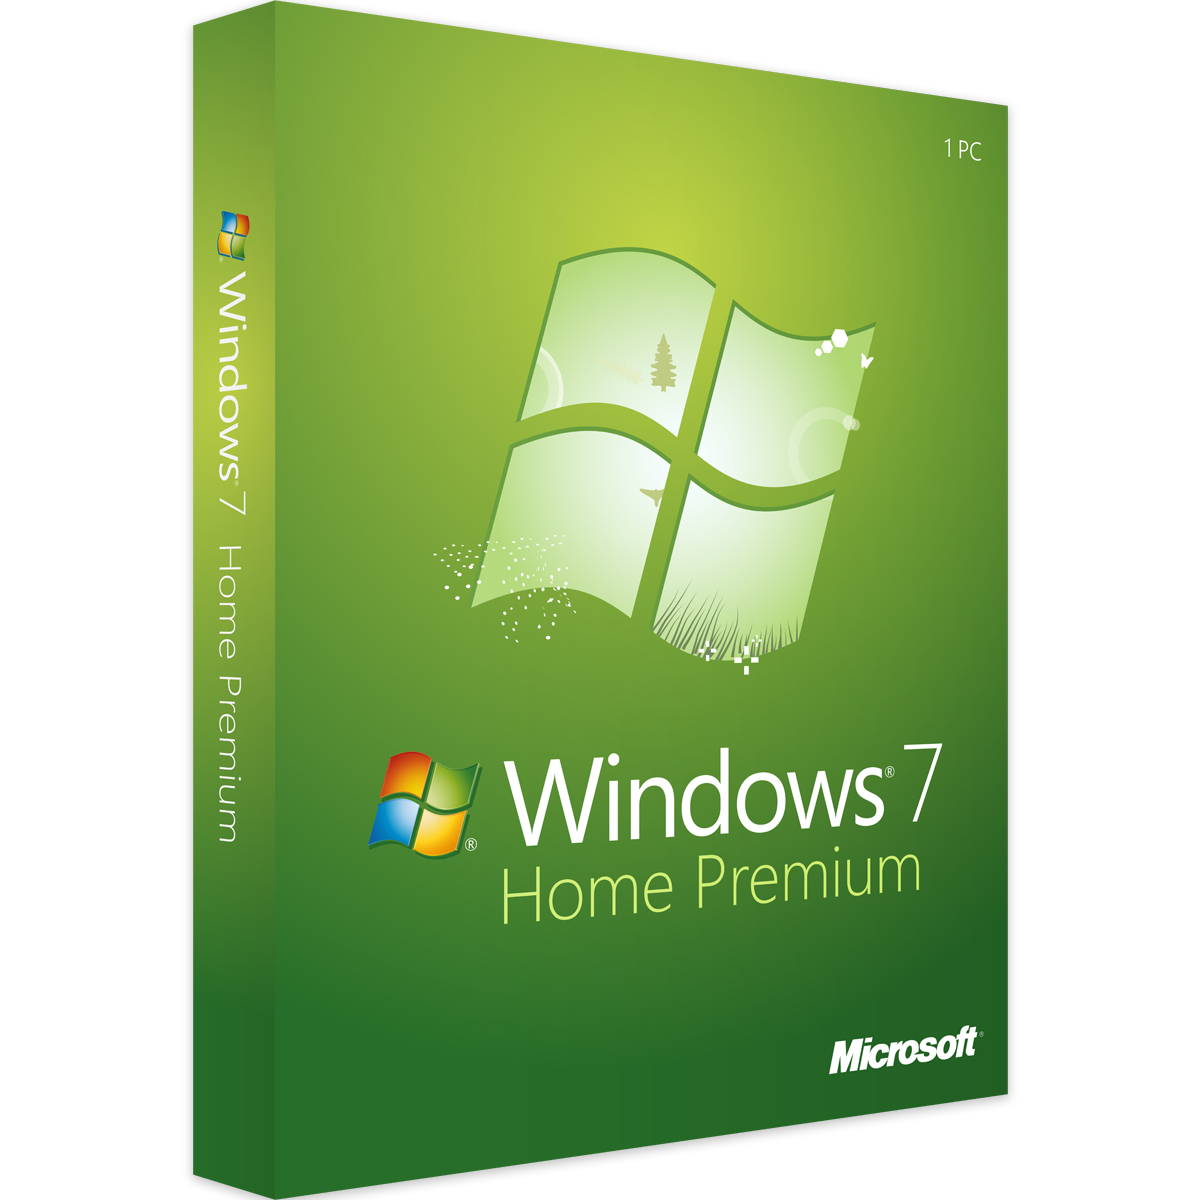 windows 7 home premium software download